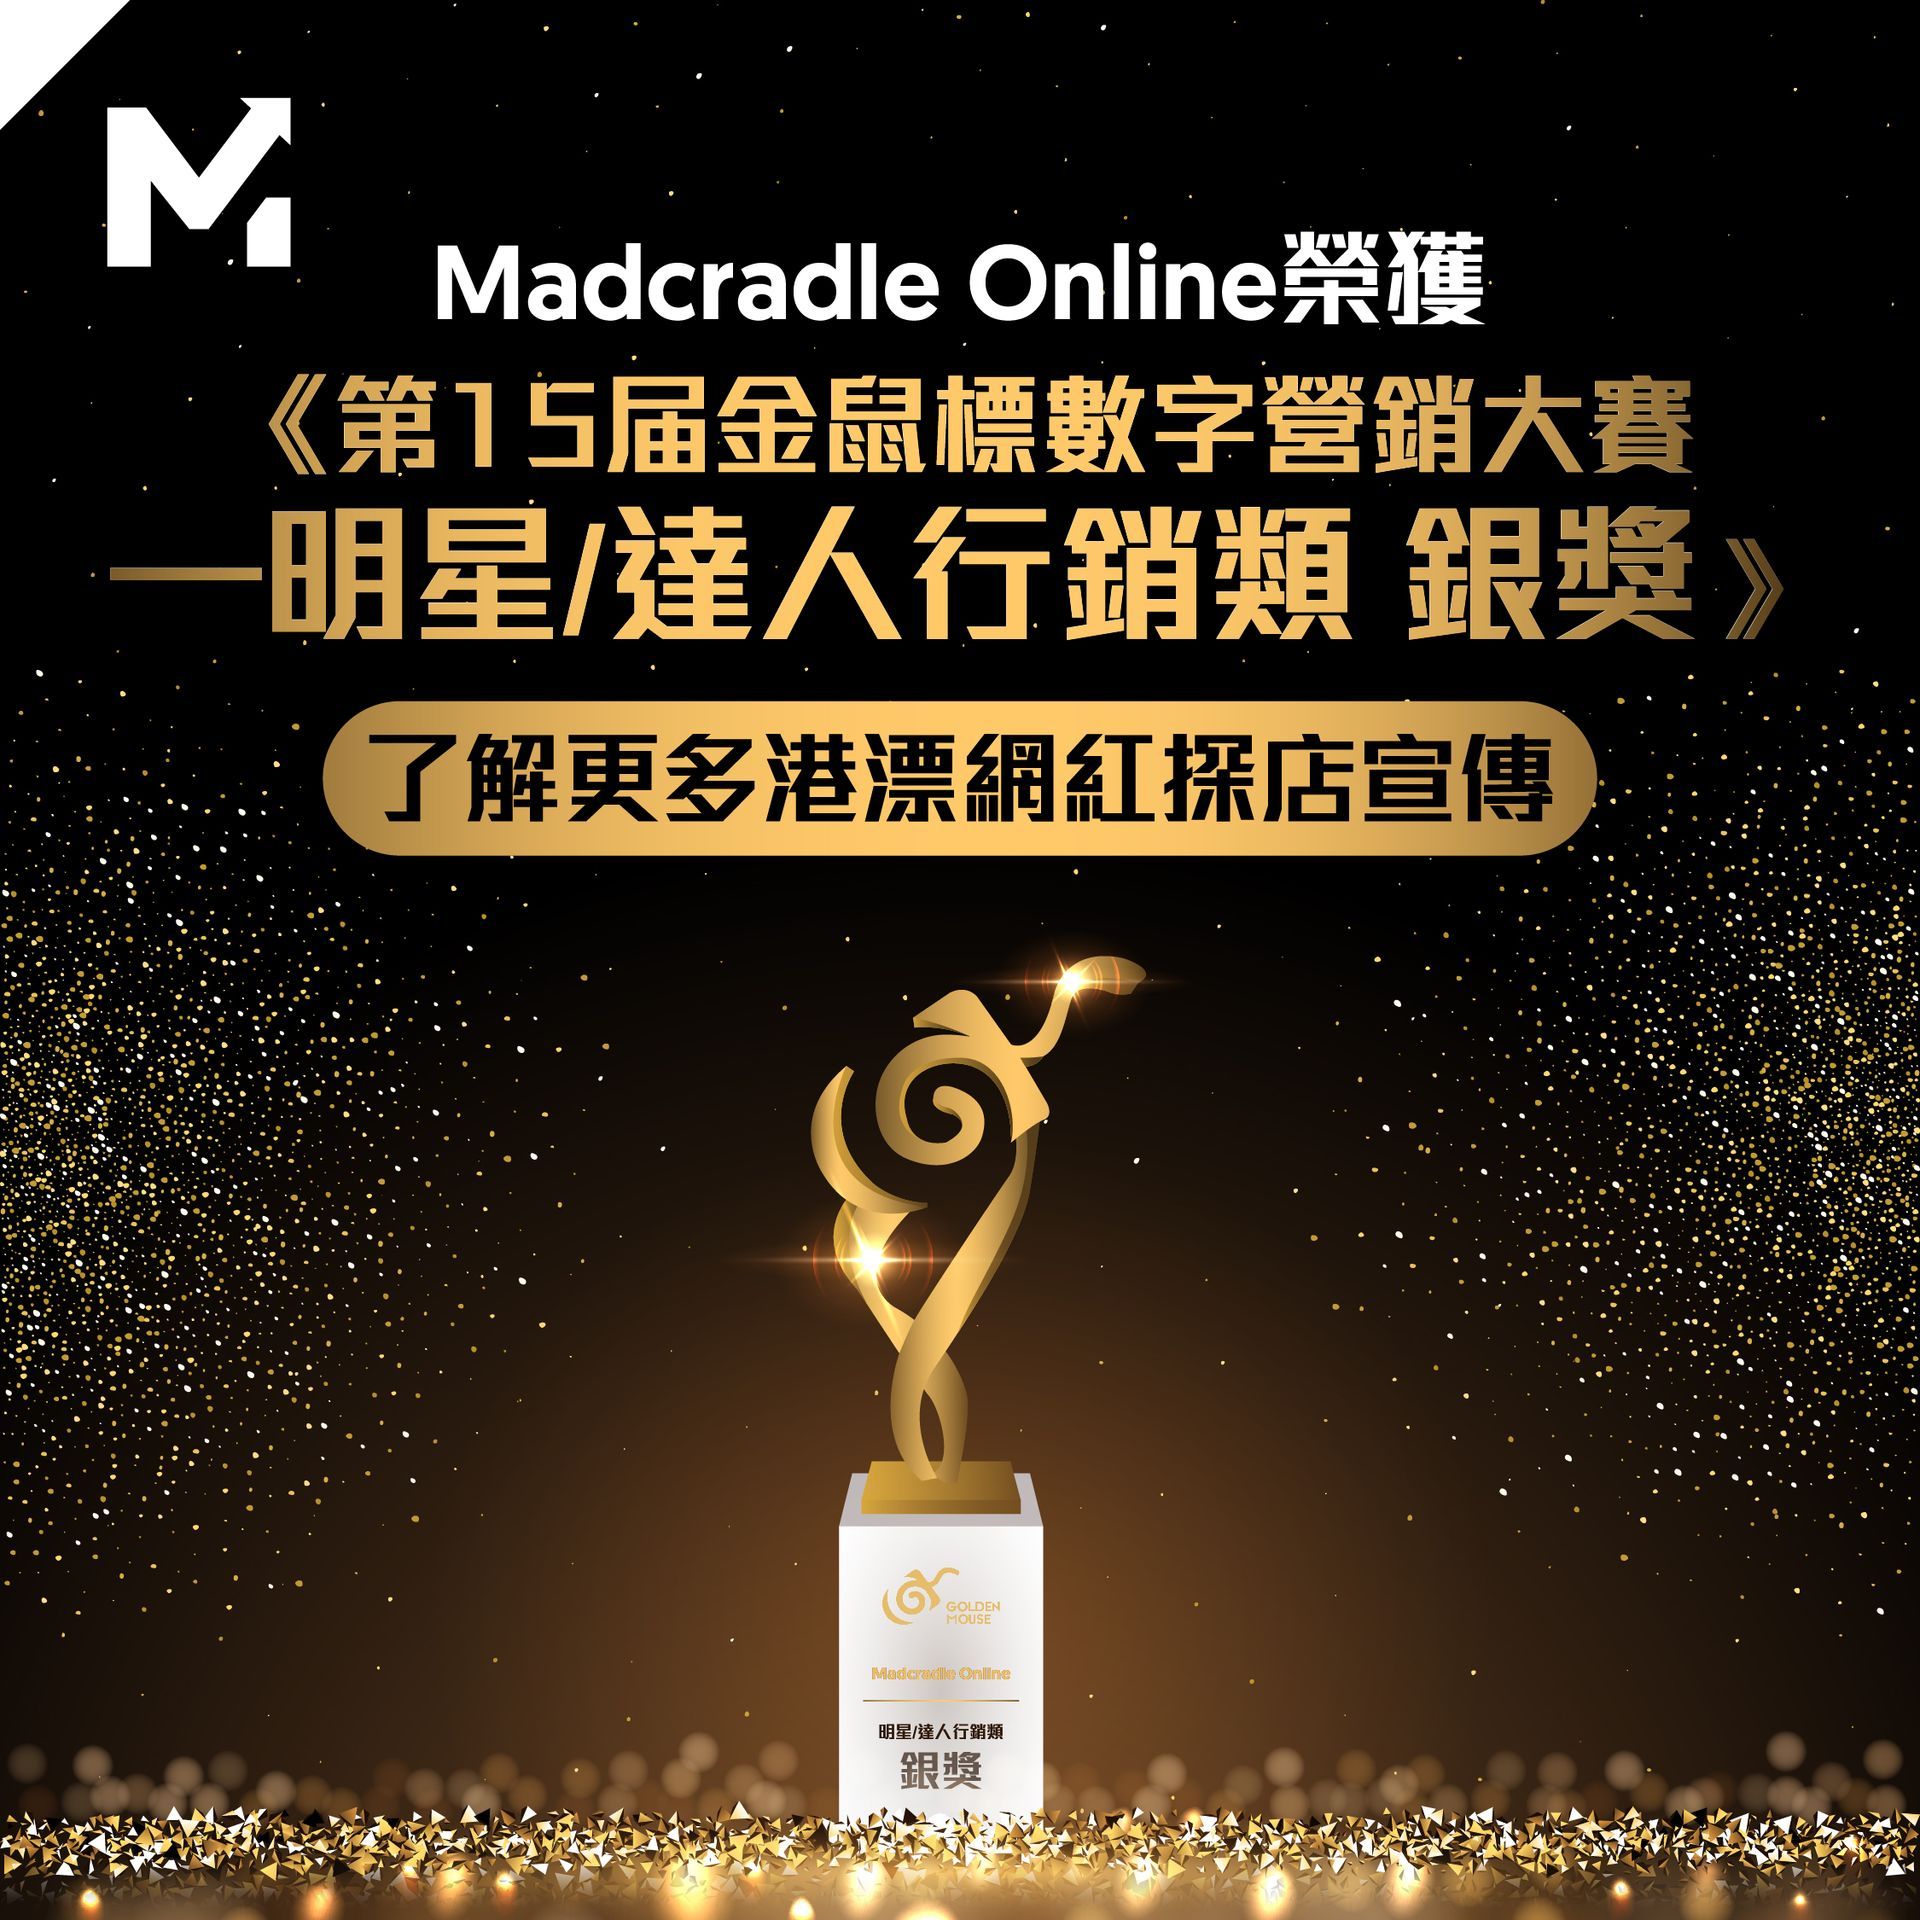 Madcradle Online榮獲《第15届金鼠標數字營銷大賽—明星/達人行銷類 銀獎》了解更多港漂網紅探店宣傳